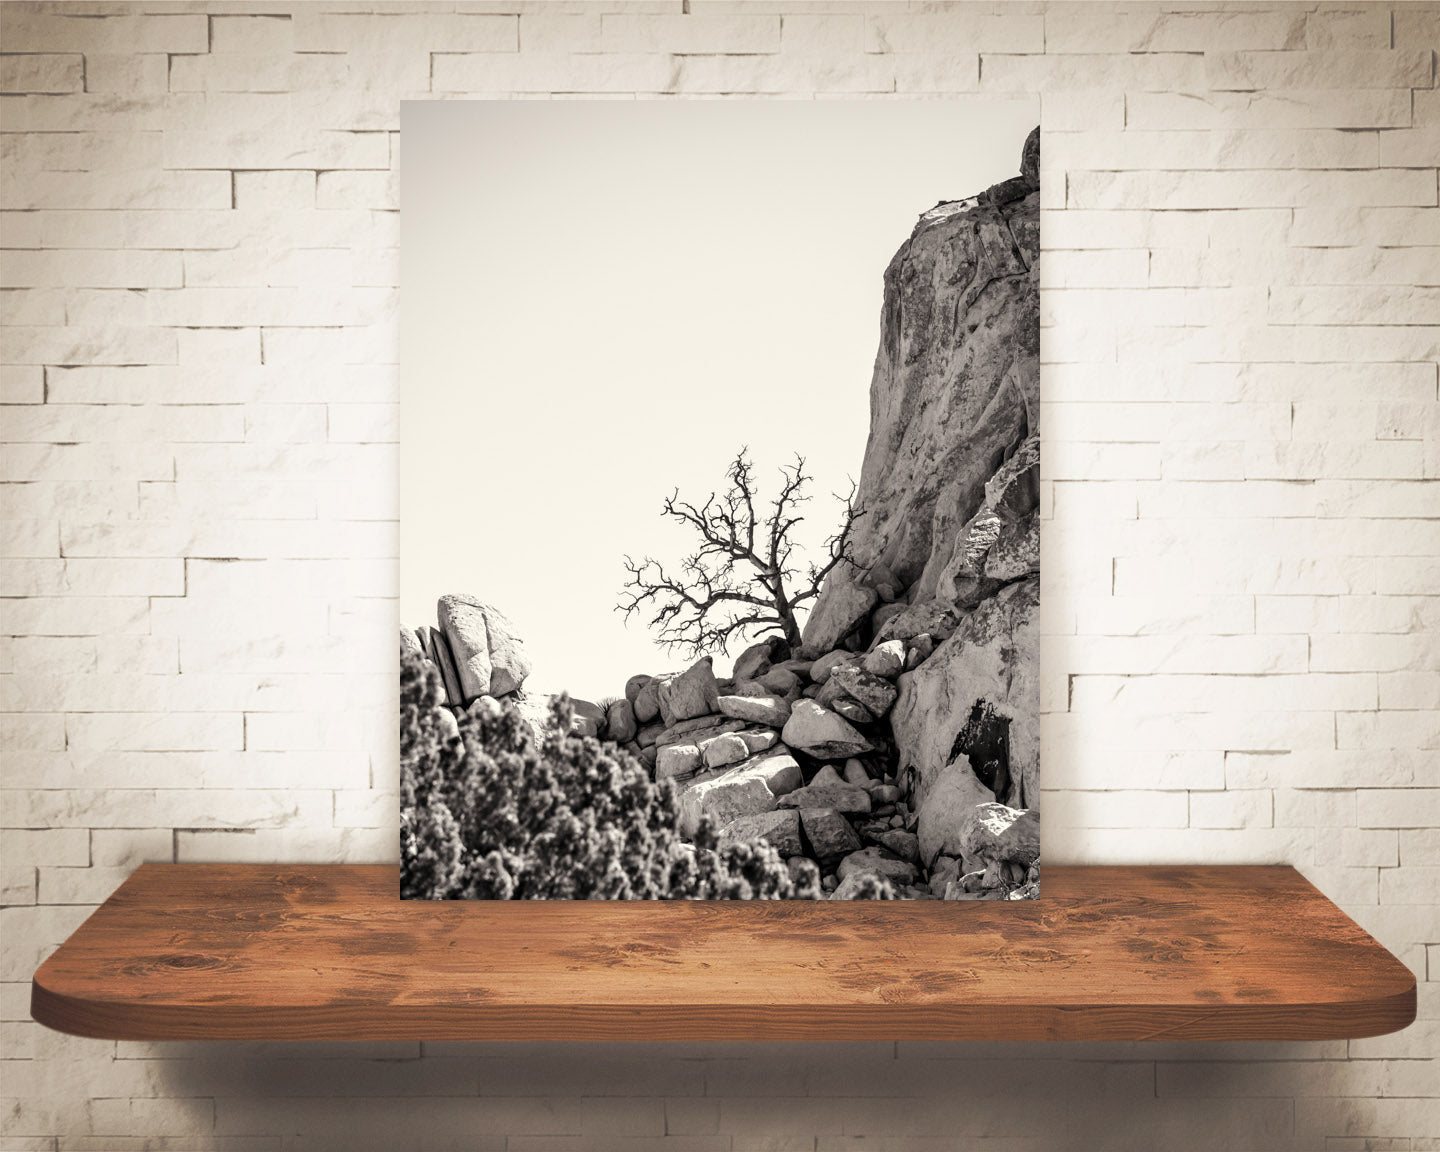 Desert Rock Landscape Photograph Sepia